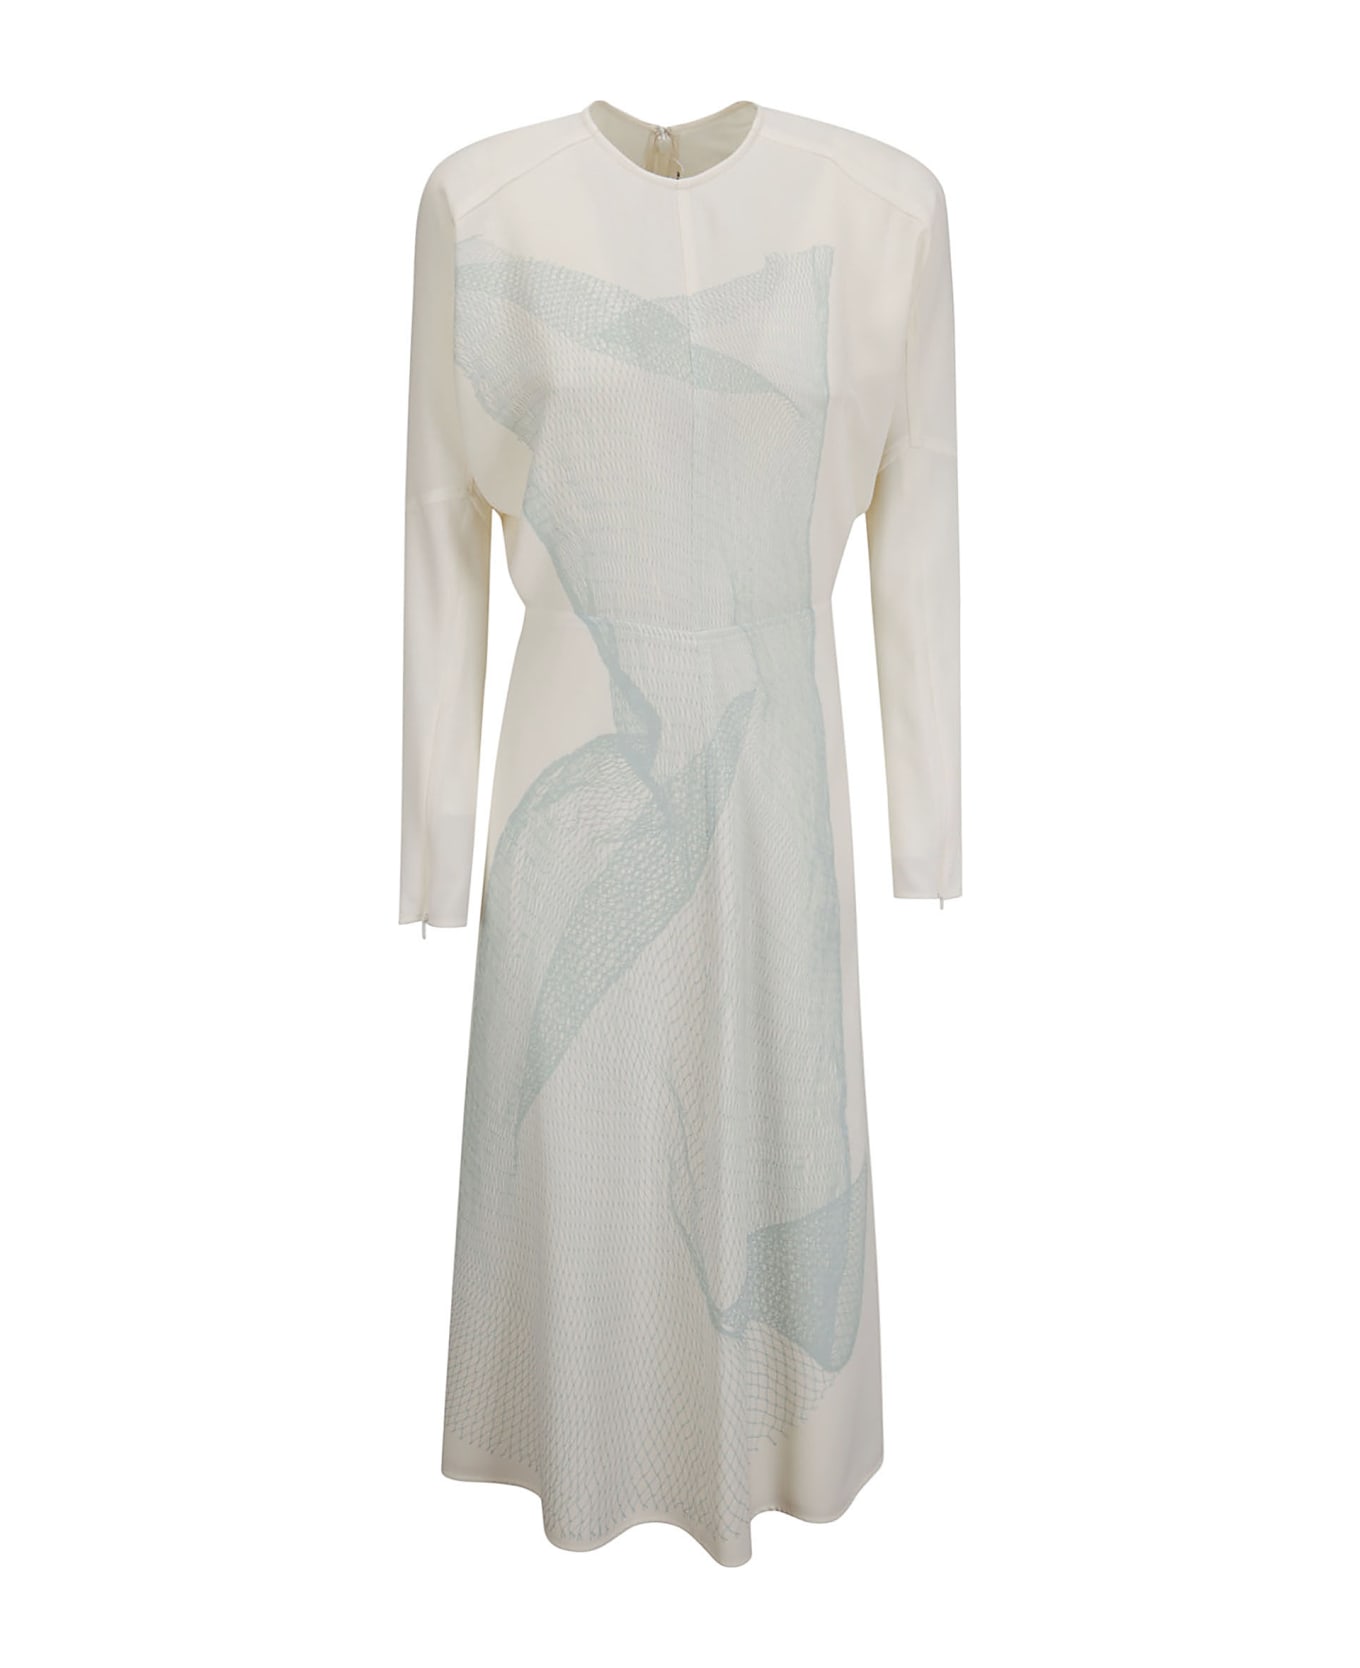 Victoria Beckham Long Sleeve Dolman Midi Dress - CONTORTED NET - WHITE/VPR BLUE